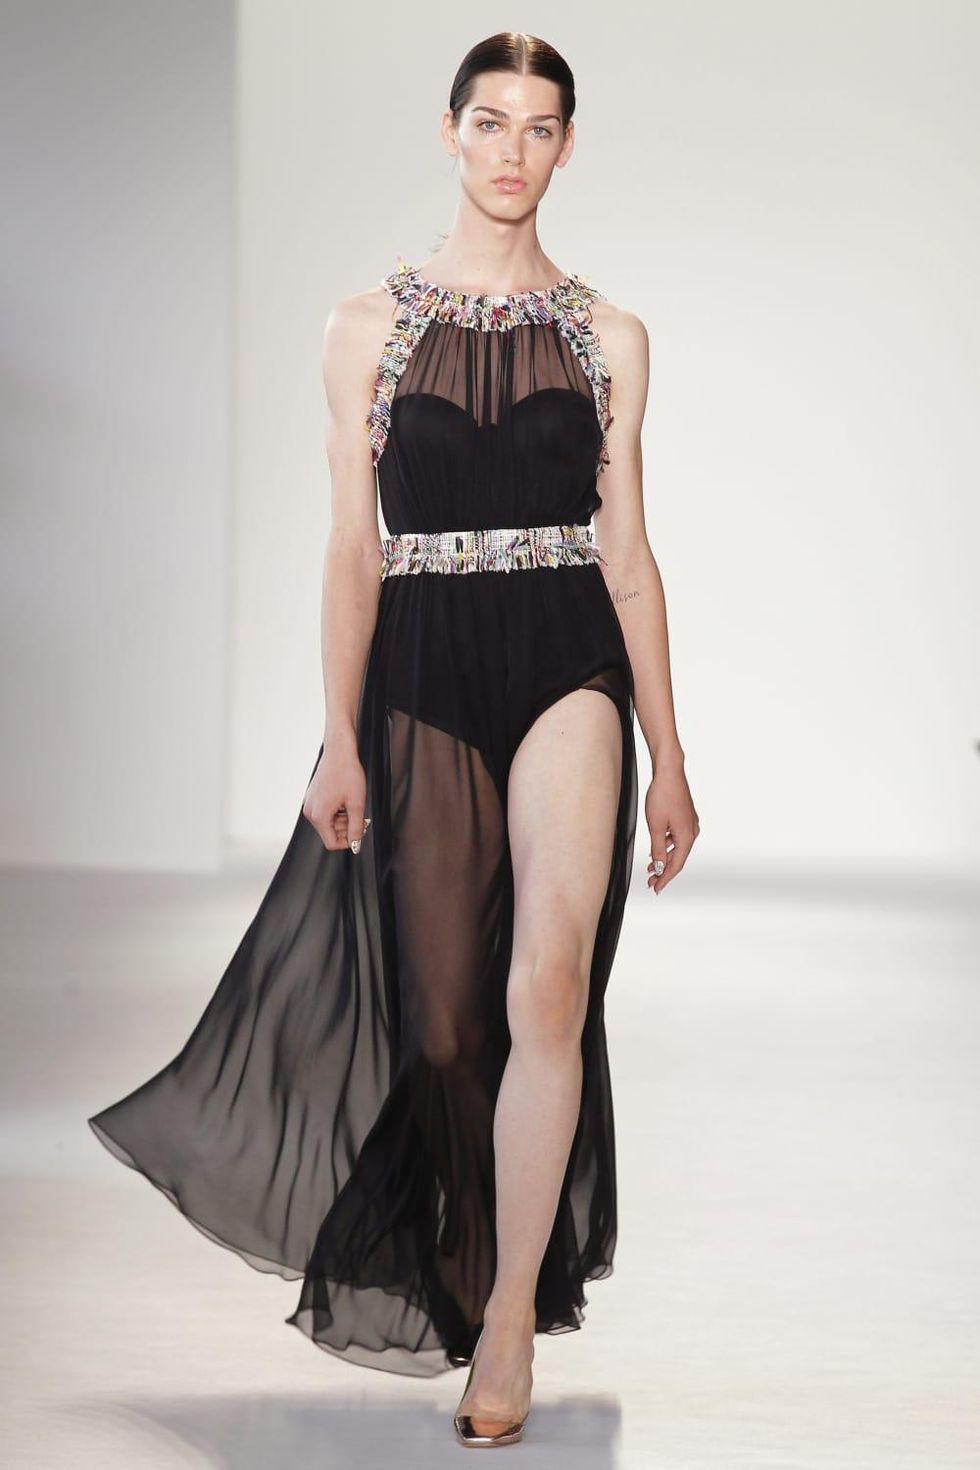 Transgender model Avie Acosta in Christian Siriano gown at runway show